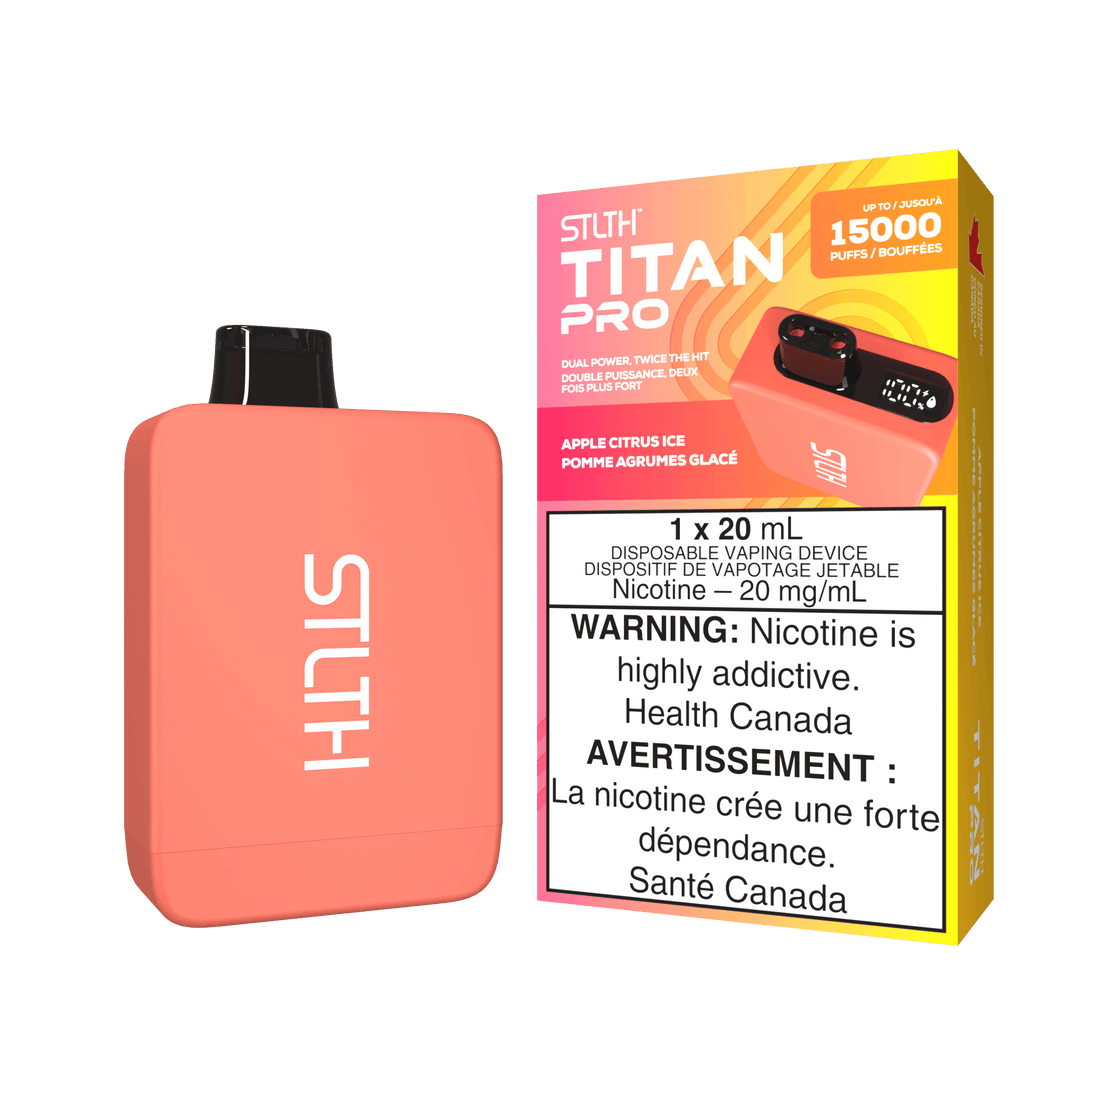 STLTH Titan Pro - Apple Citrus Ice - Vapor Shoppe